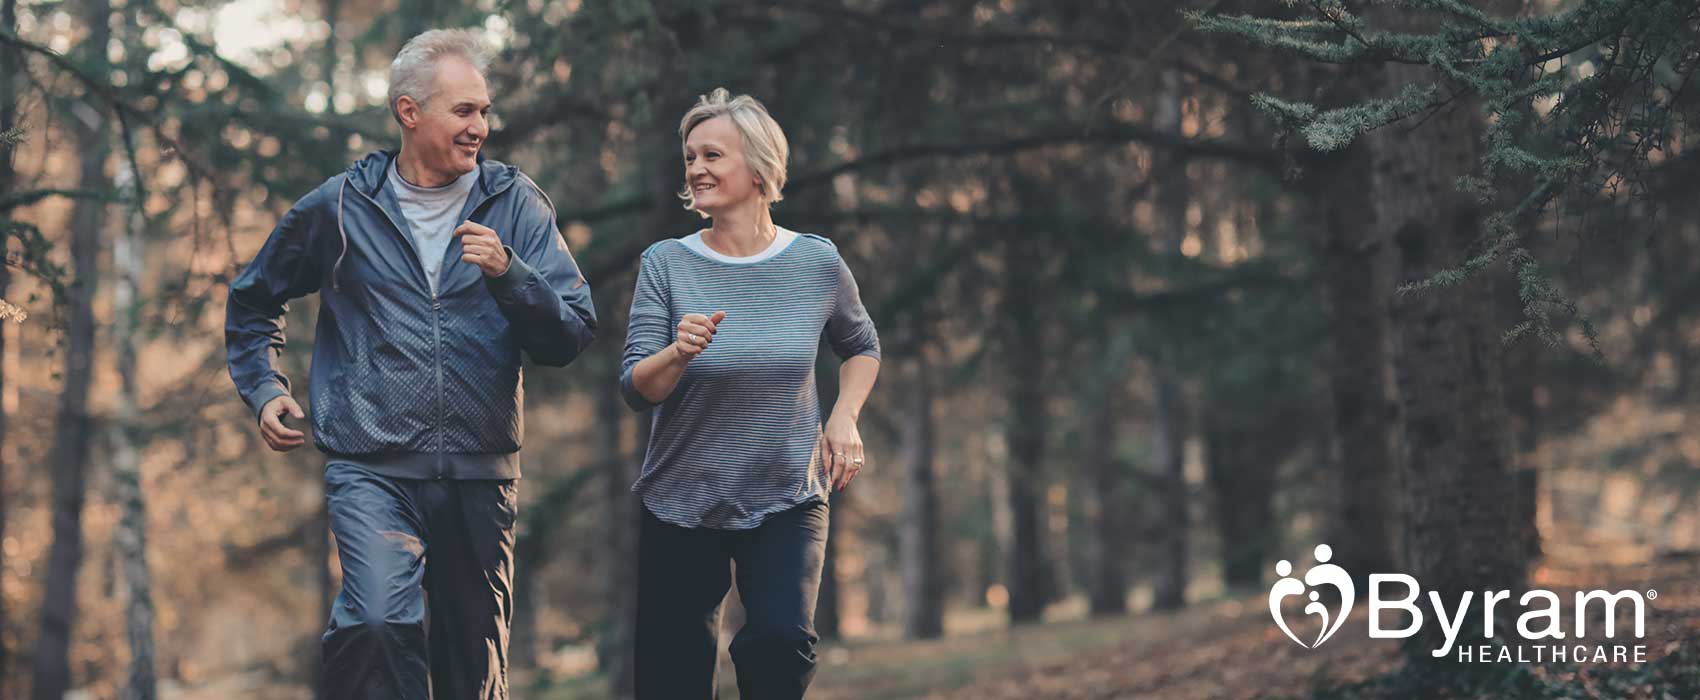 Elderly Man and woman jogging